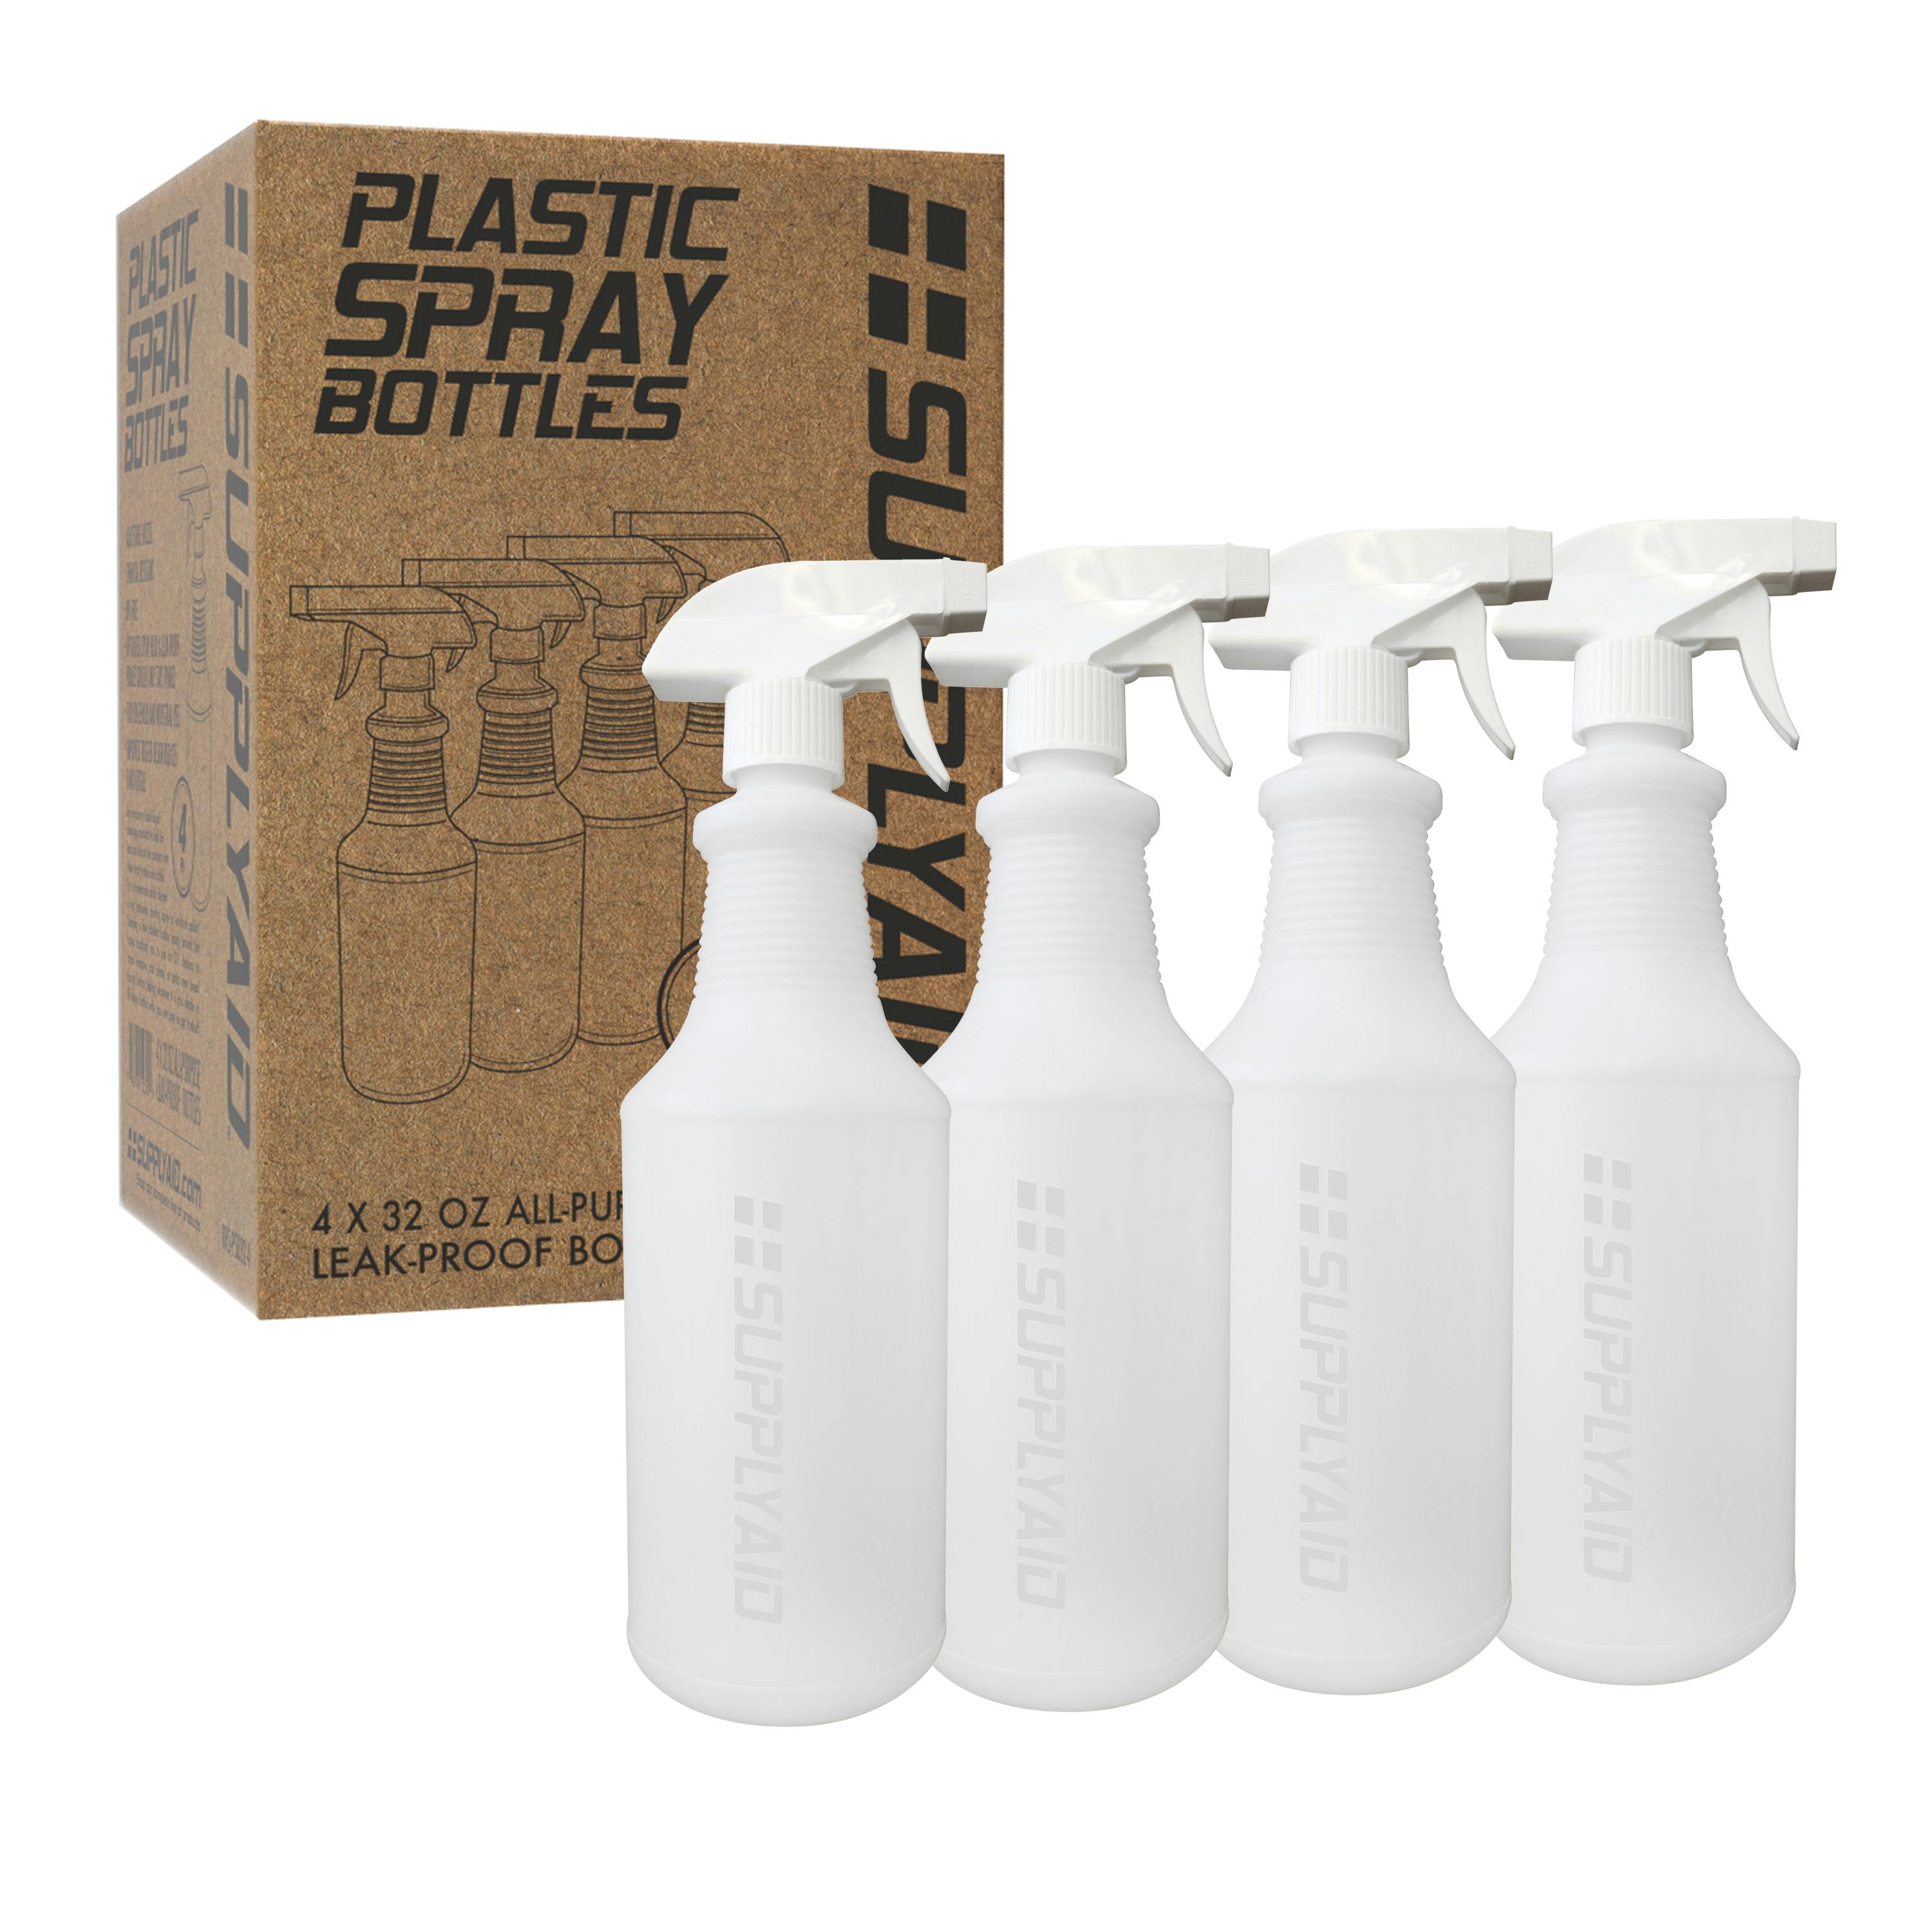 Plastic Spray Bottle with Nozzle - White Opaque 32 oz